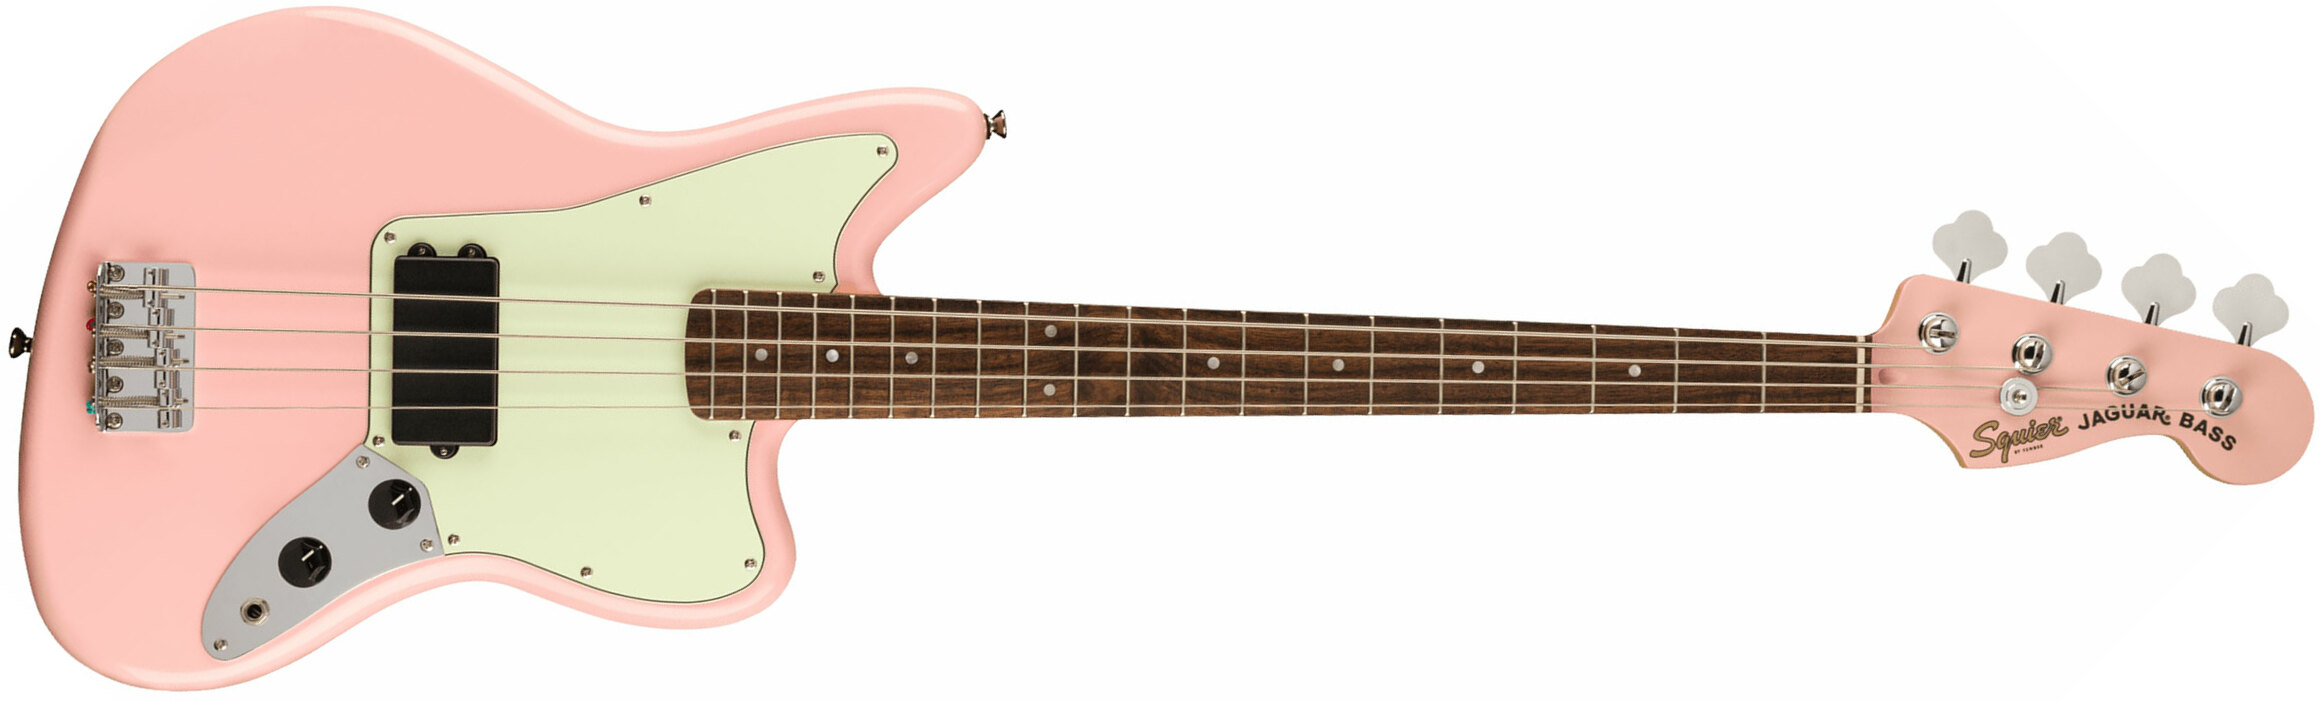 Squier Jaguar Bass H Affinity Fsr Lau - Shell Pink - Solid body elektrische bas - Main picture